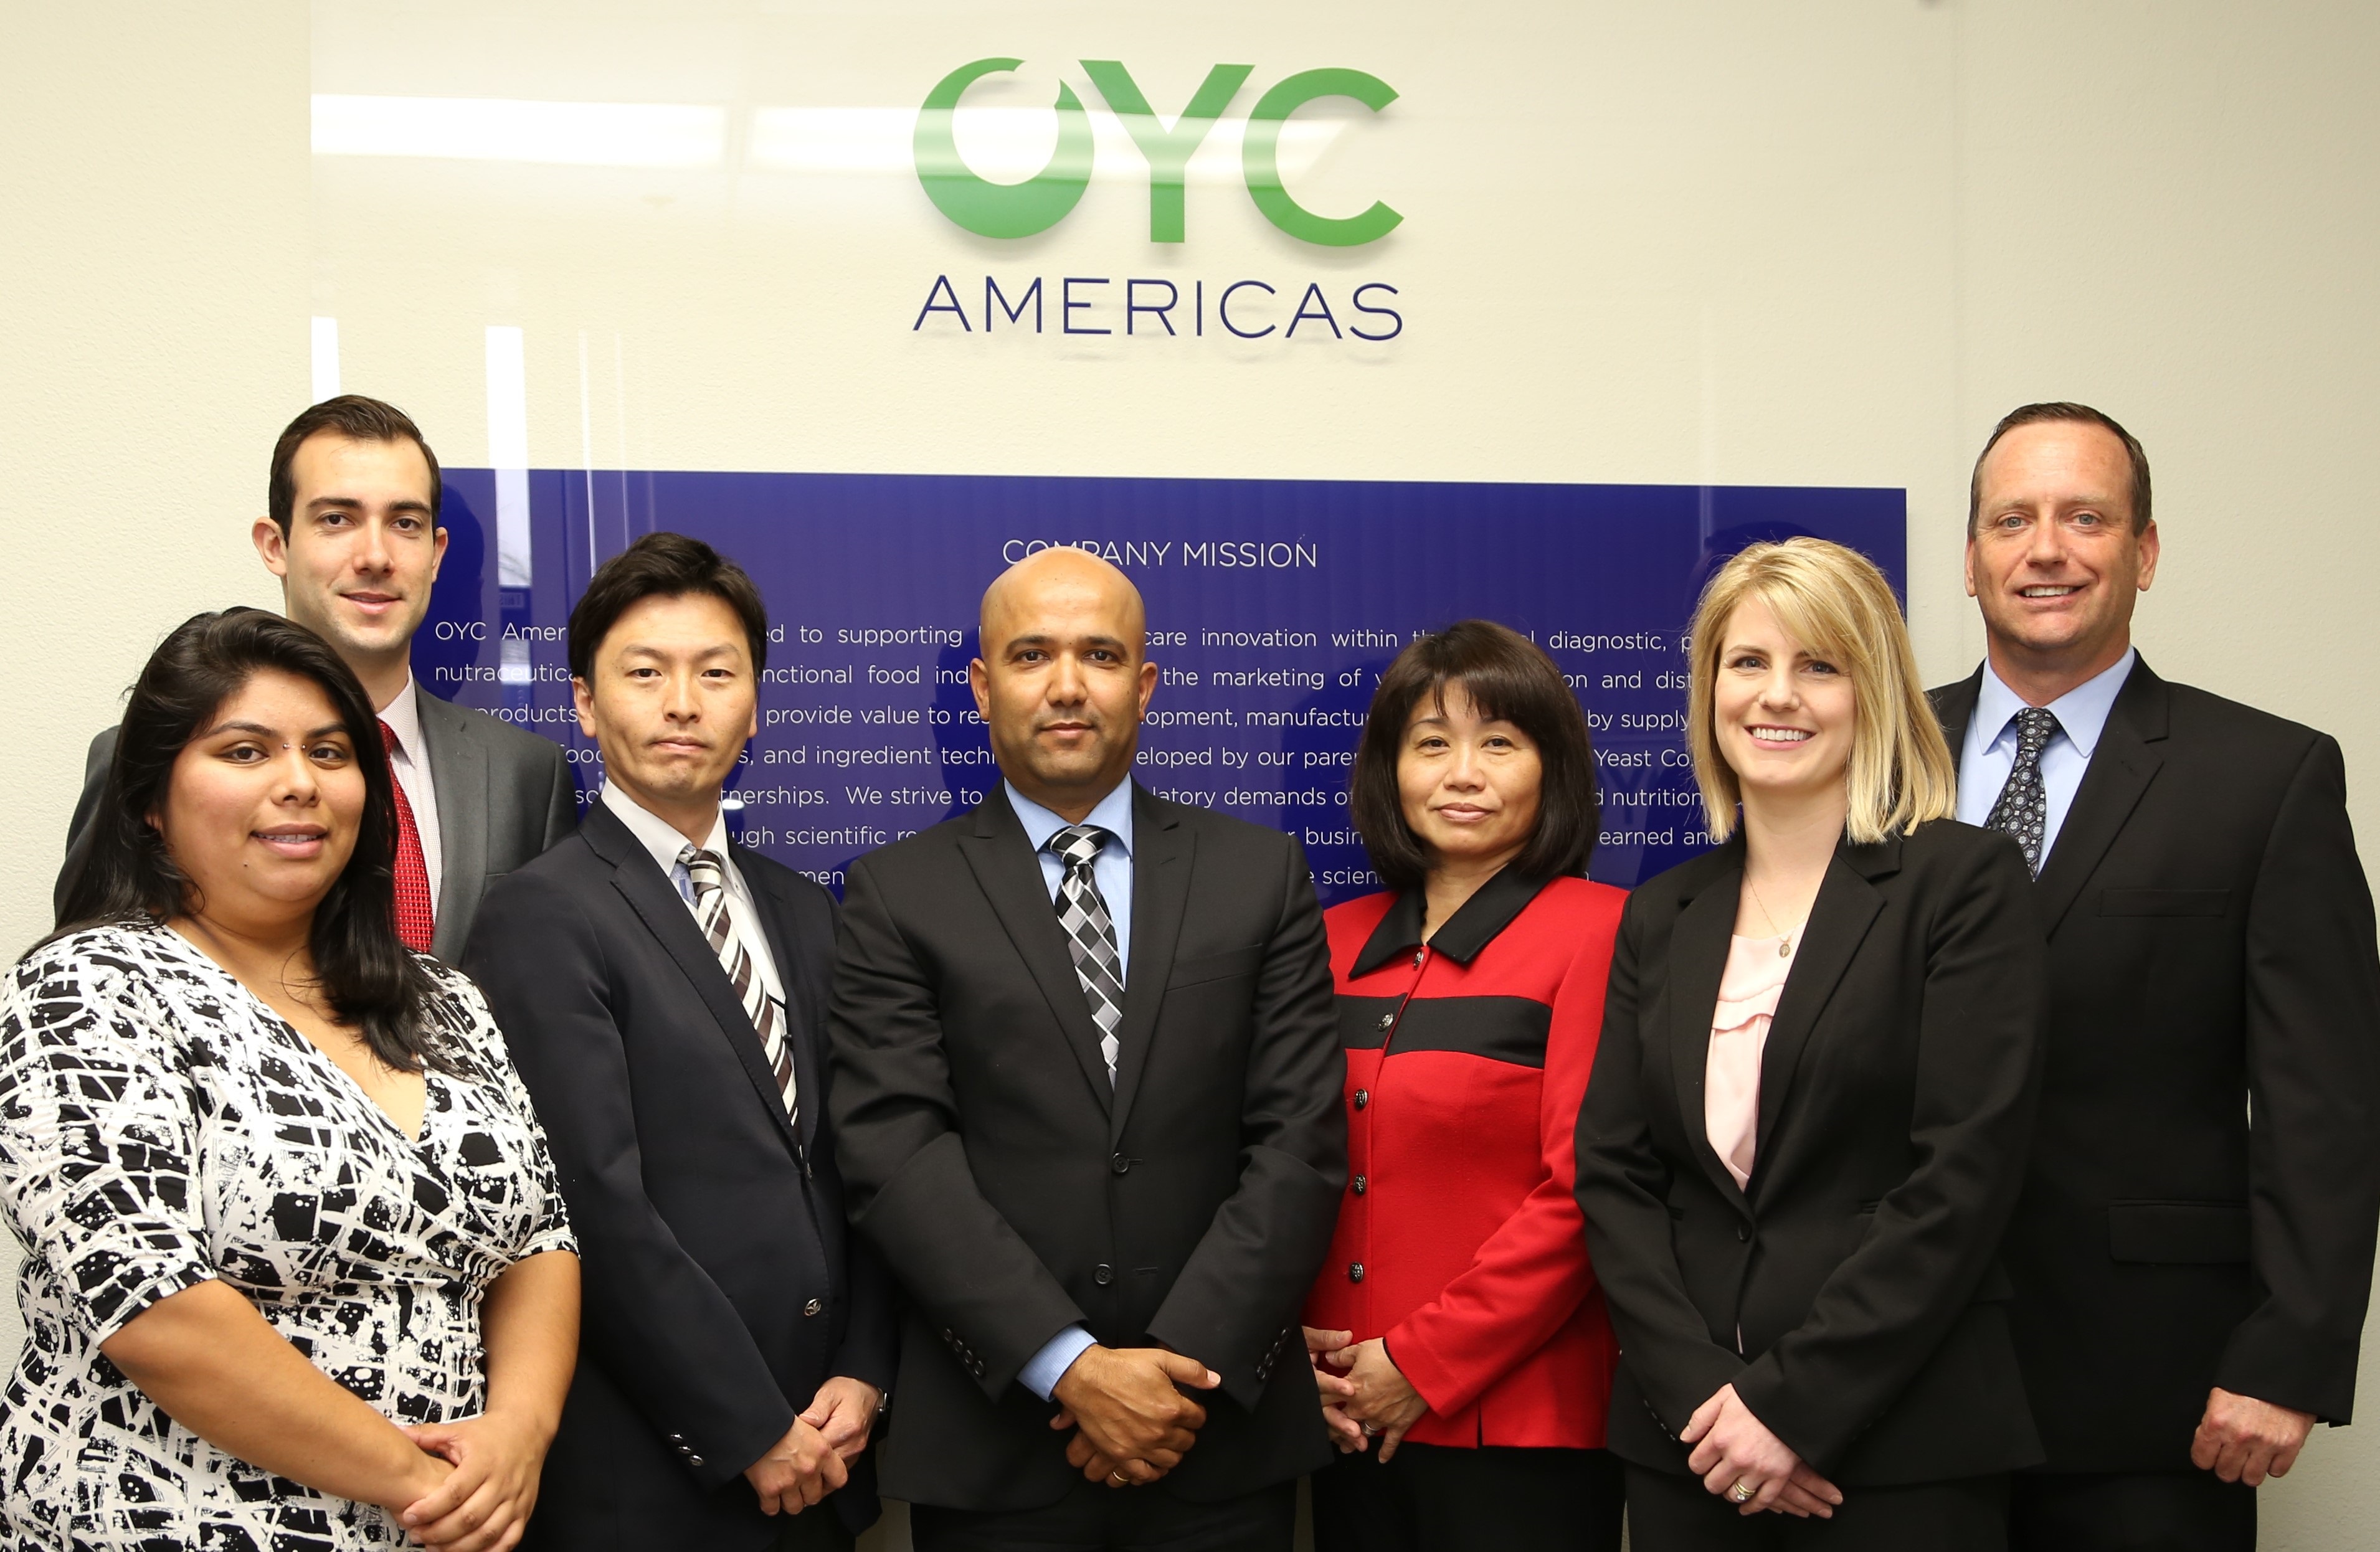 OYC Americas Team